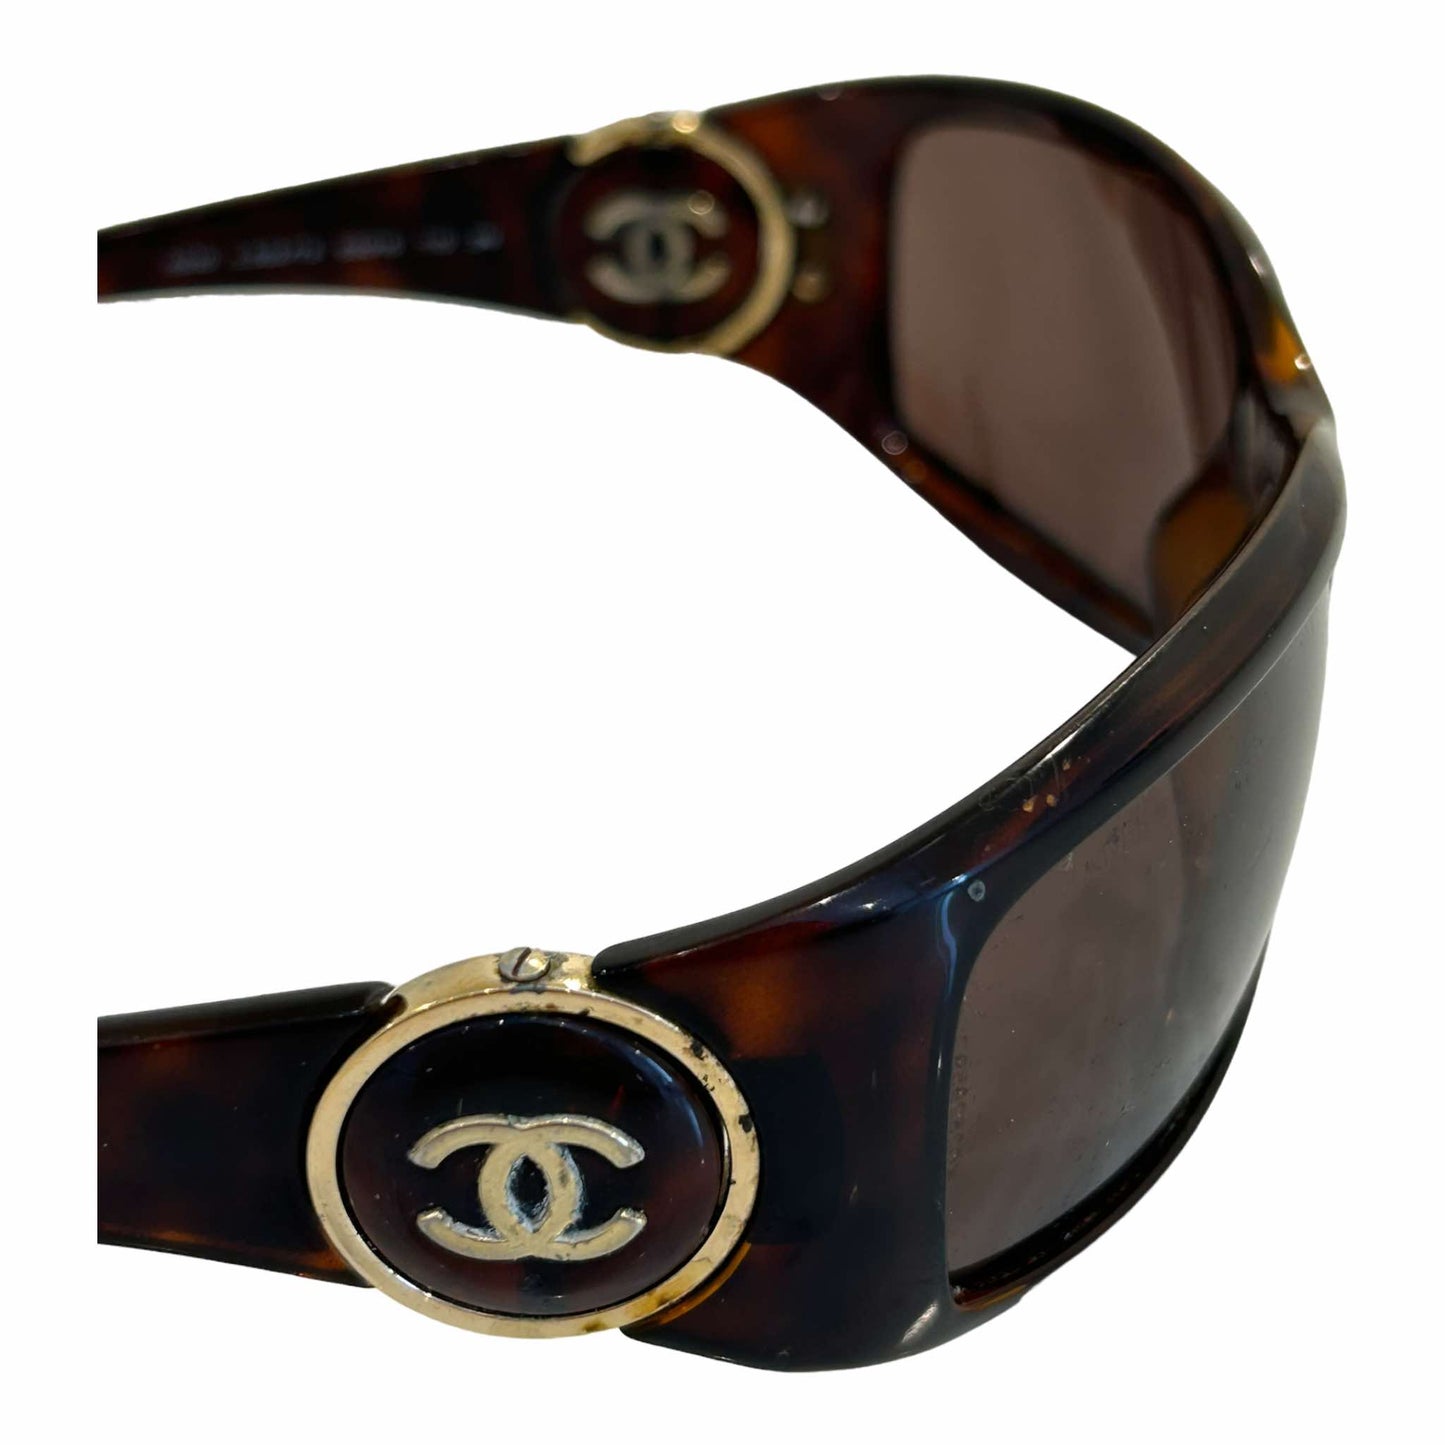 Chanel Sunglasses - 6030 c.502/73